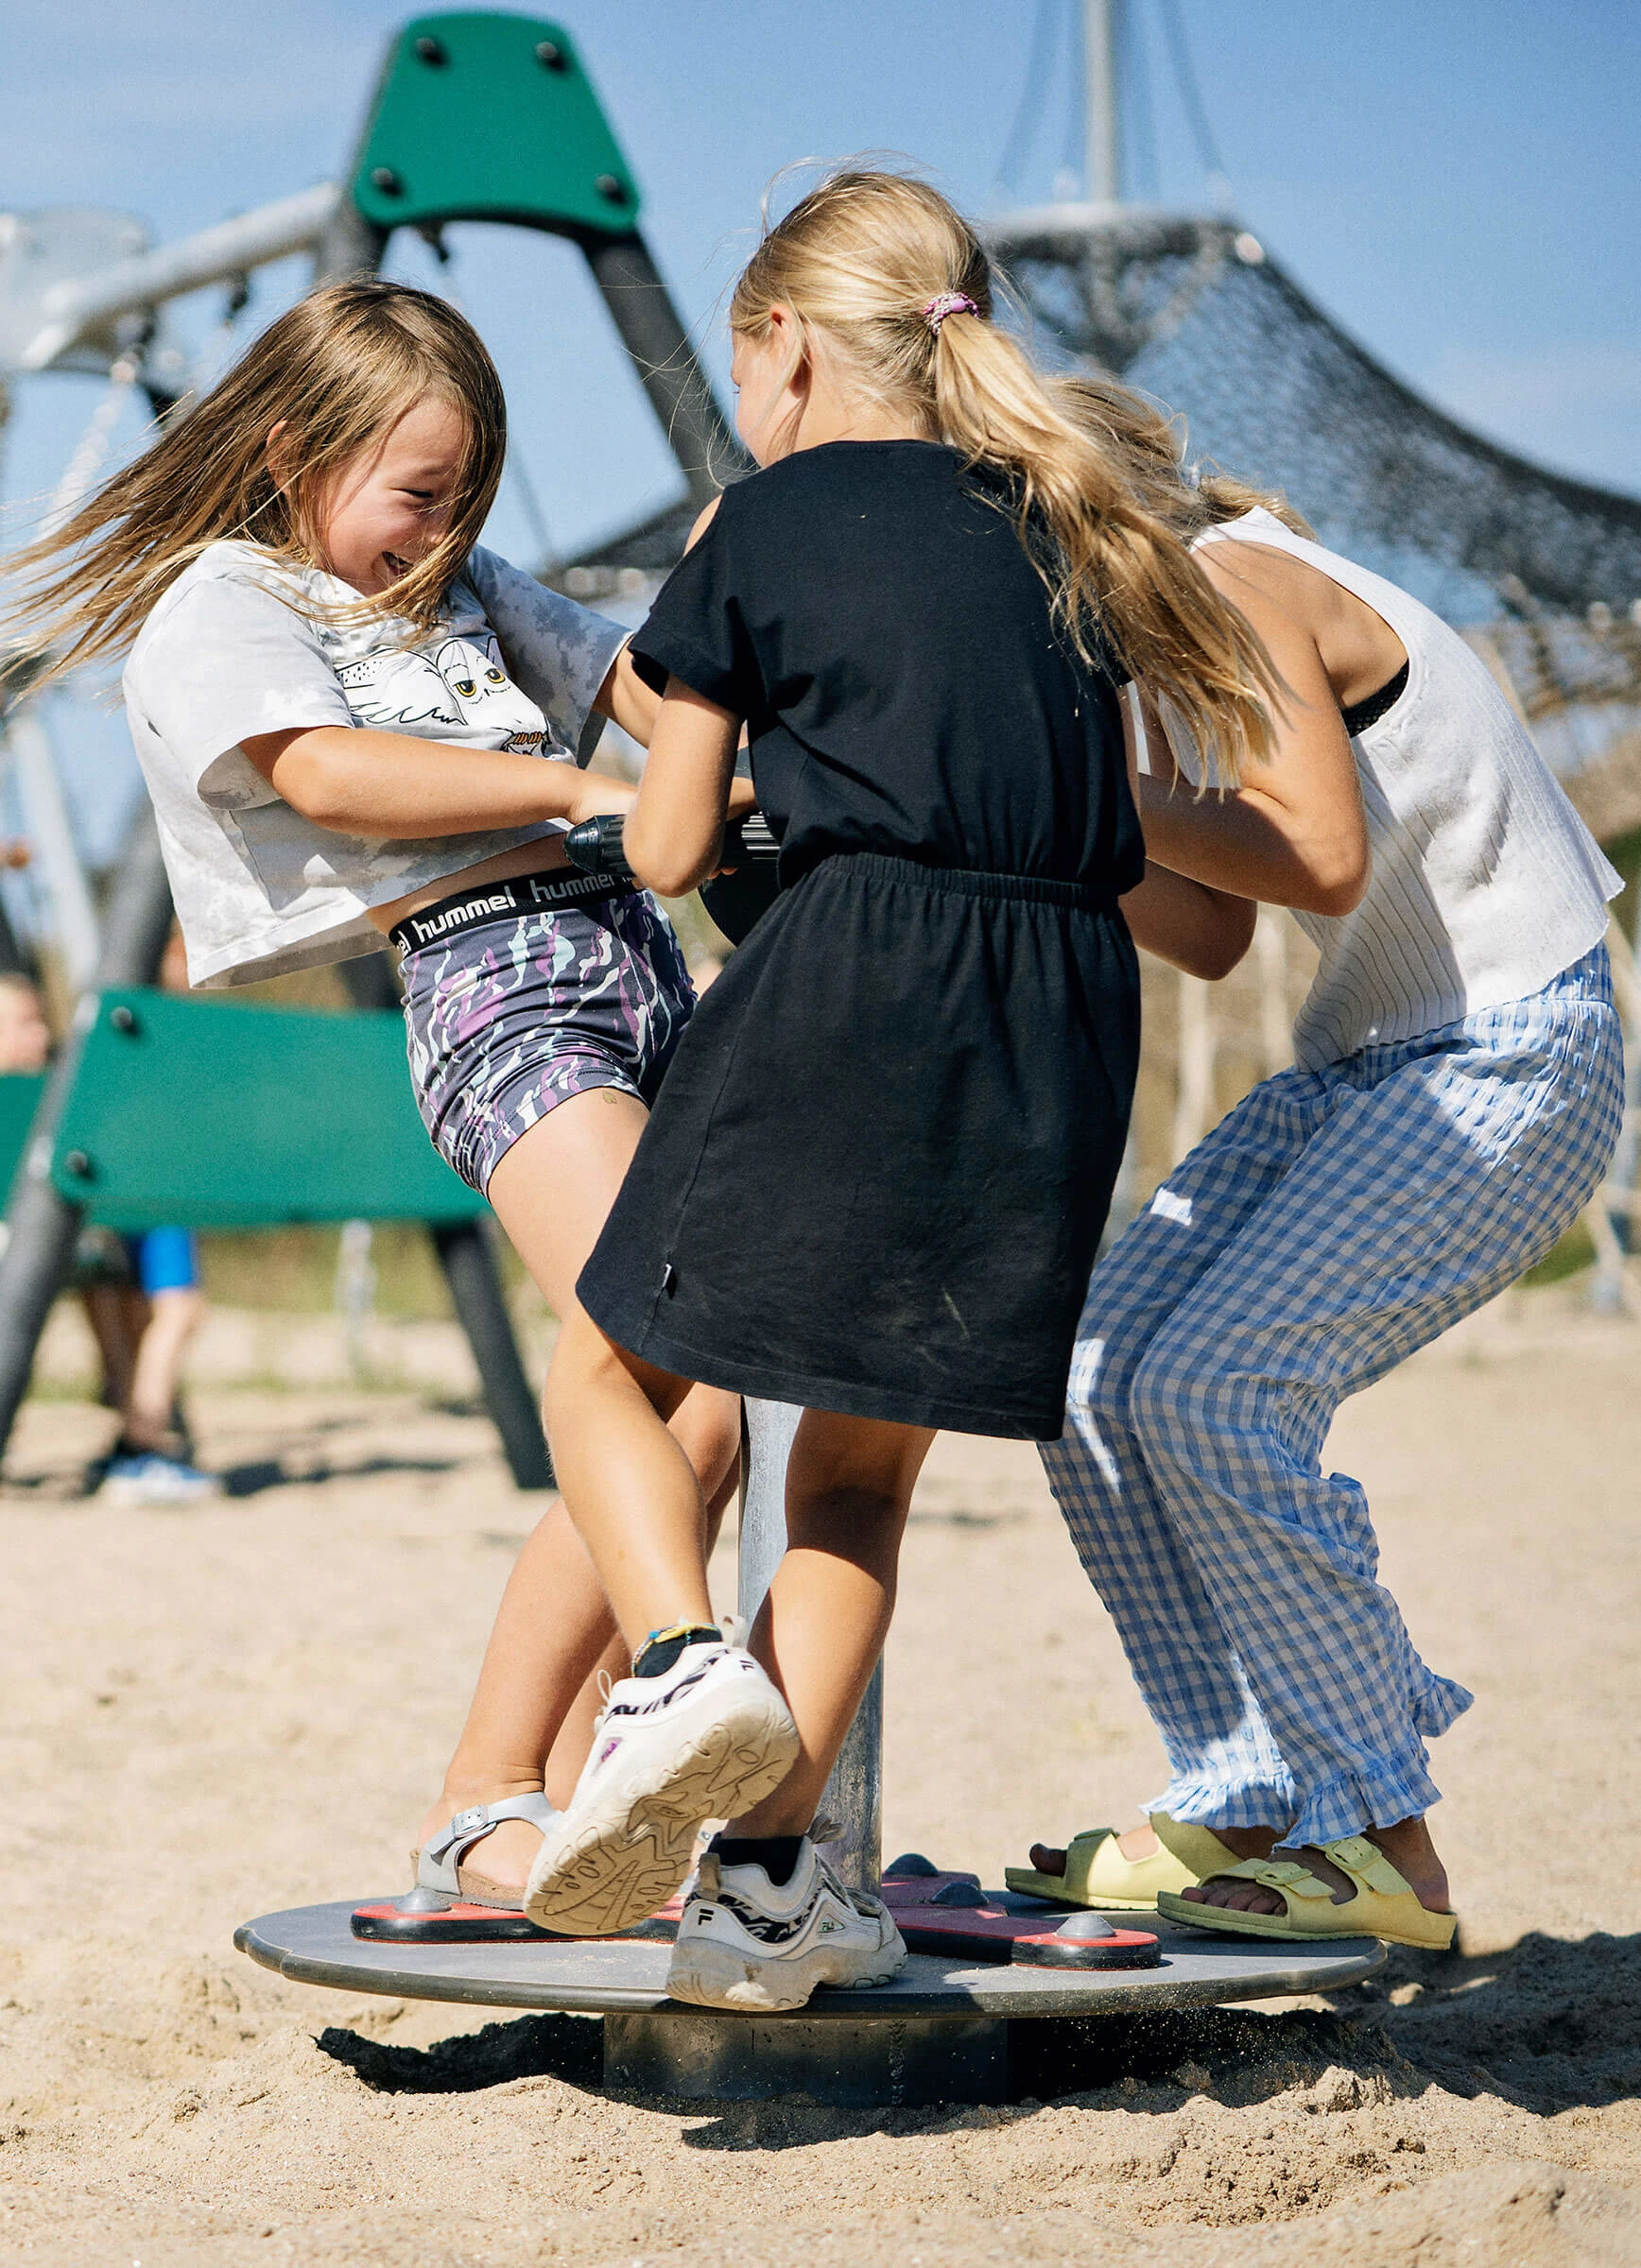 Girls playing, spinning on a school yard playground